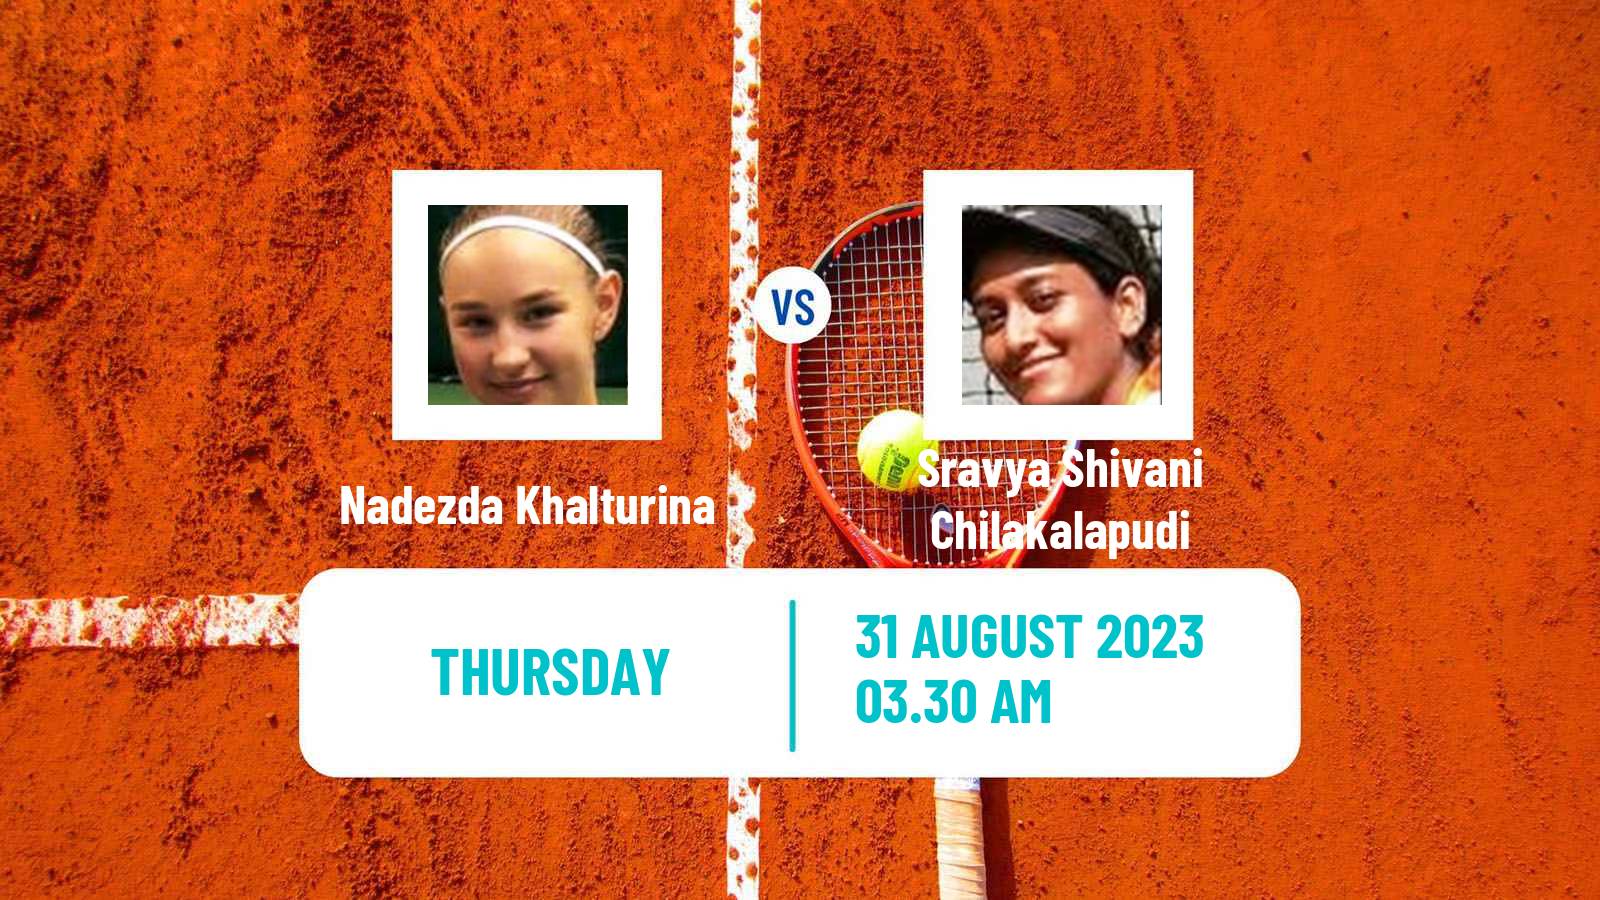 Tennis ITF W15 Baku 2 Women Nadezda Khalturina - Sravya Shivani Chilakalapudi